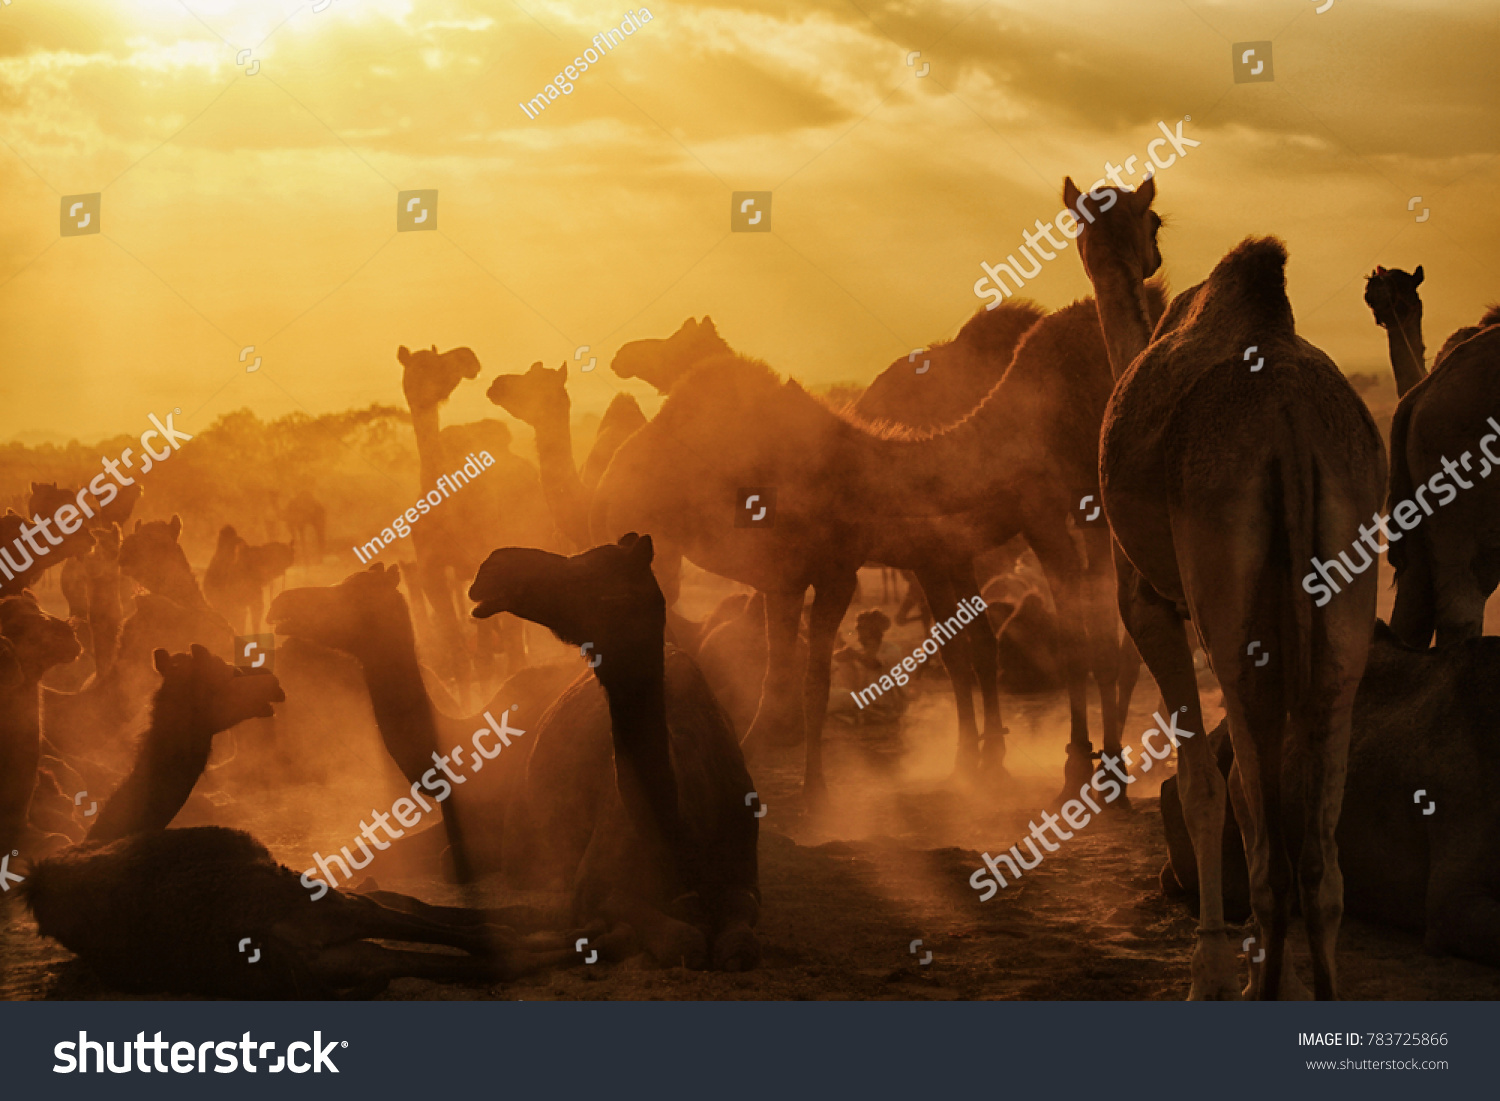 Pushkar. Rajasthan. India - November 25, 2014 : Silhouette of Camels against Golden light of the Sunrise at Pushkar Camel Fair (Pushkar Mela) #783725866